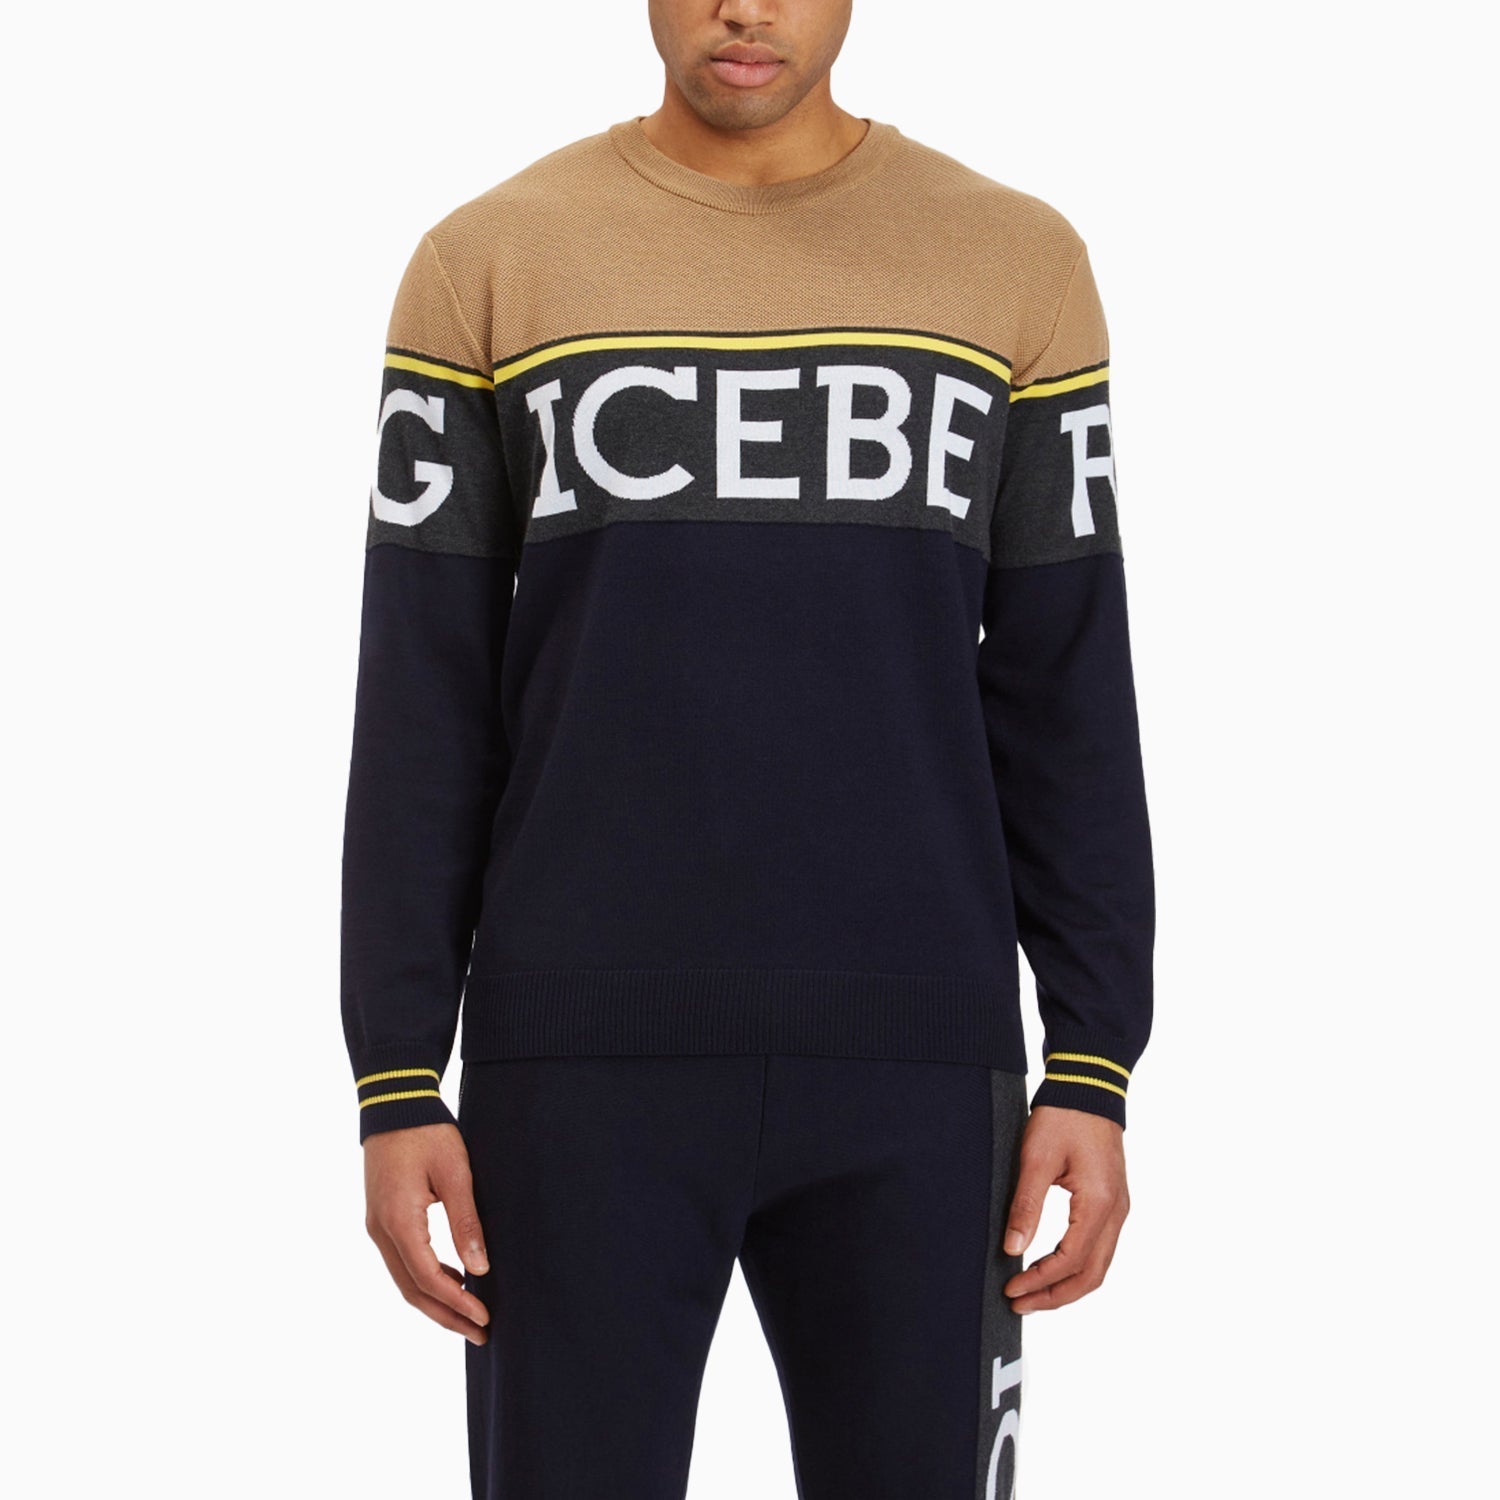 iceberg-mens-round-neck-knitted-sweatshirt-a013-7010-0001